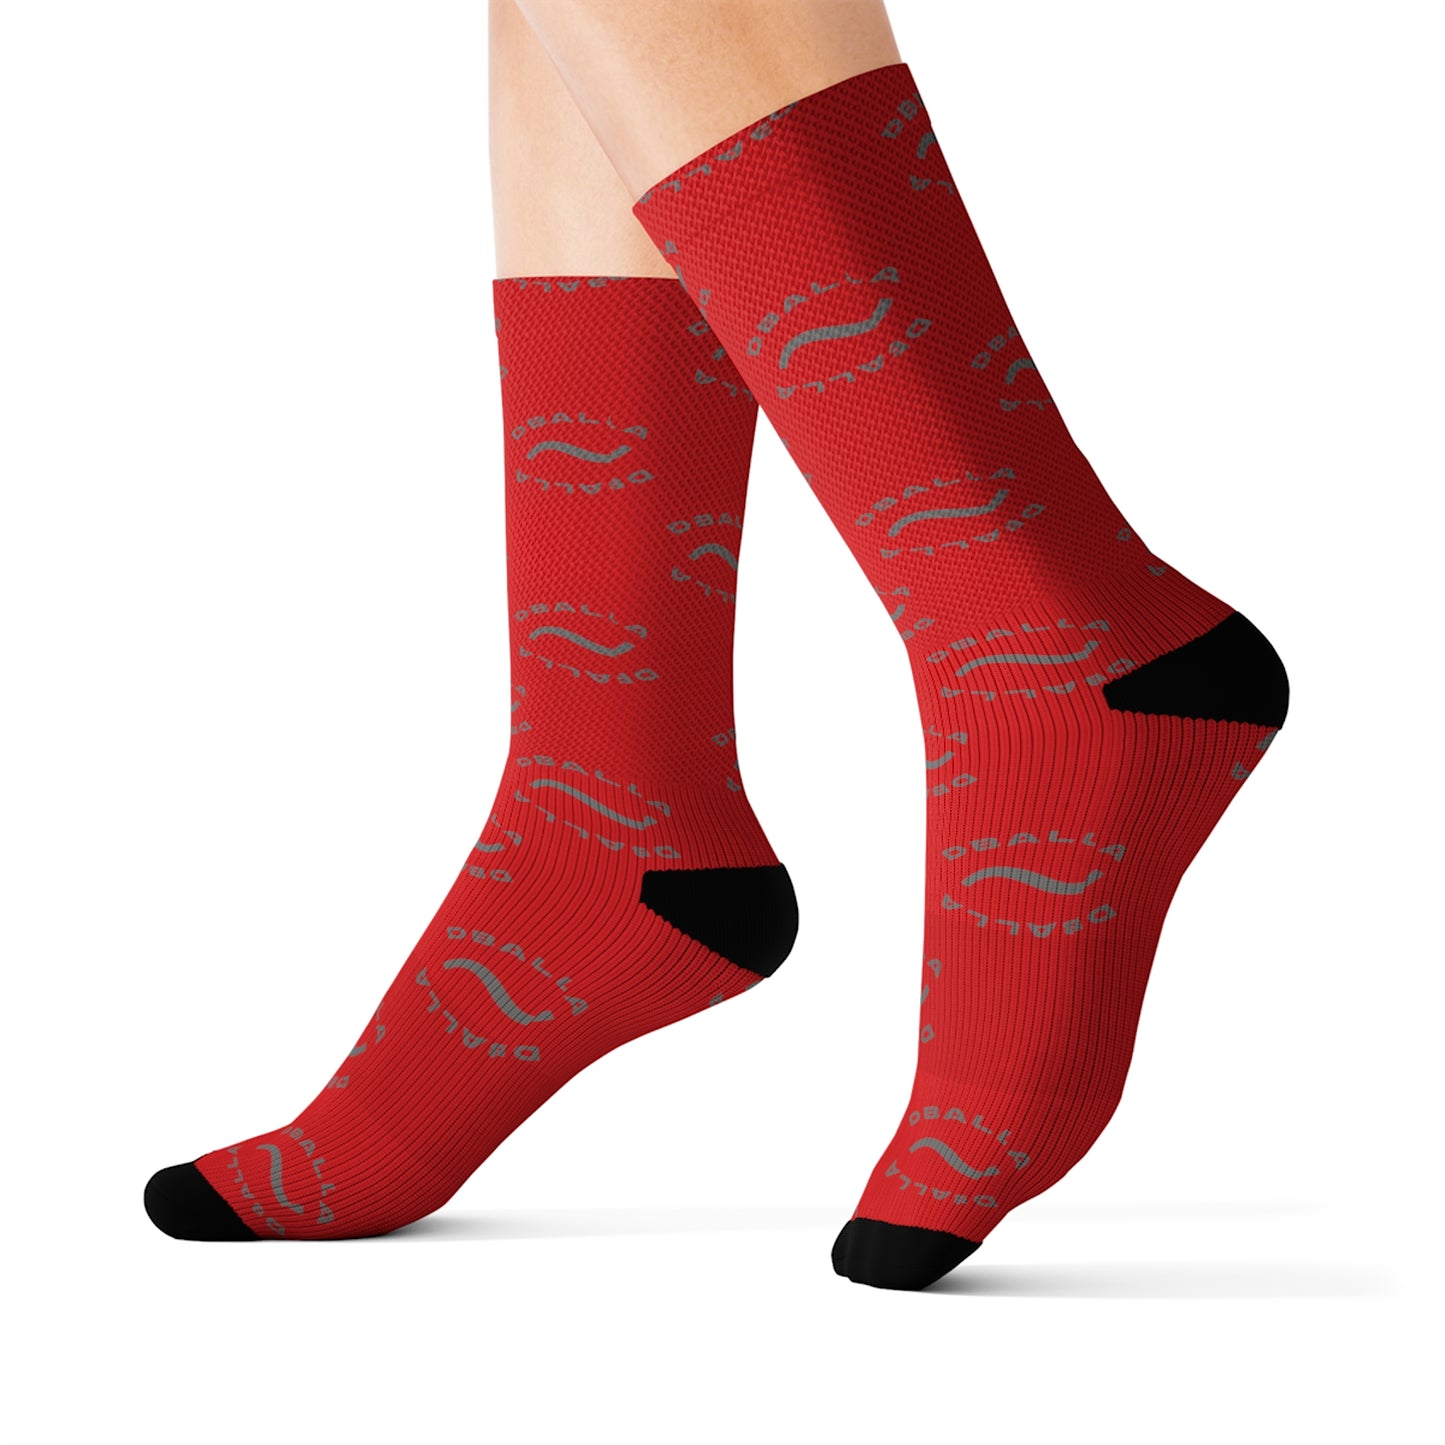 THE FOOTBALLA Socks - Red